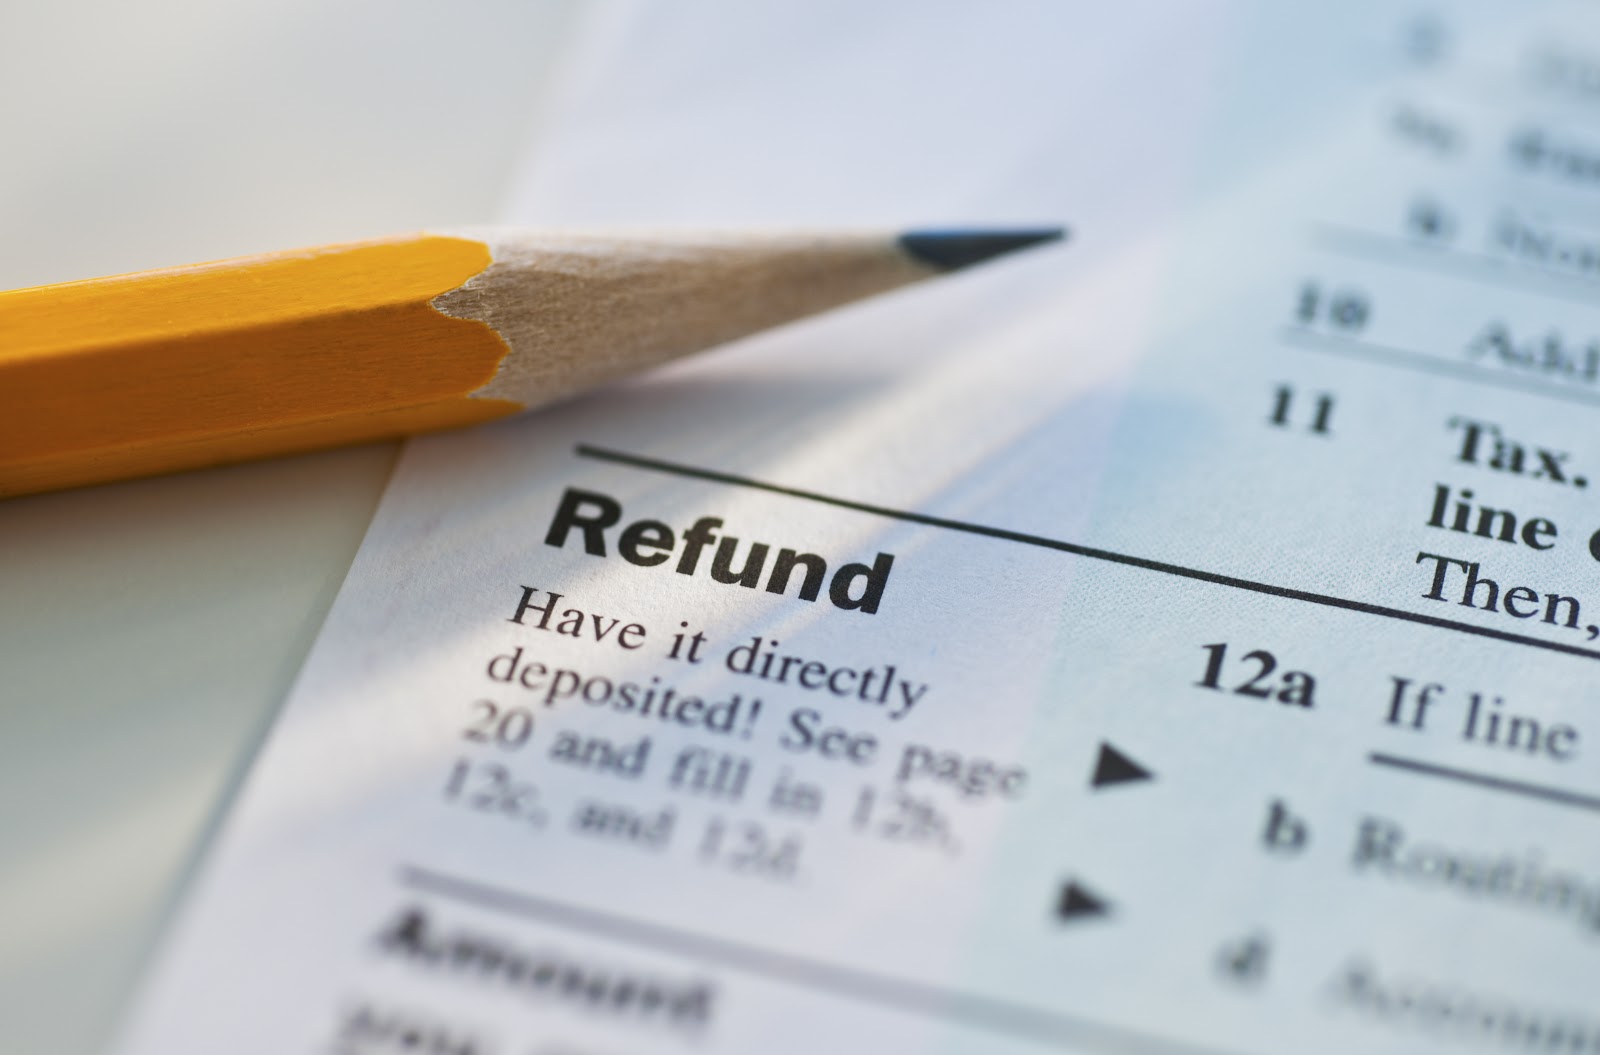 tax refund image
